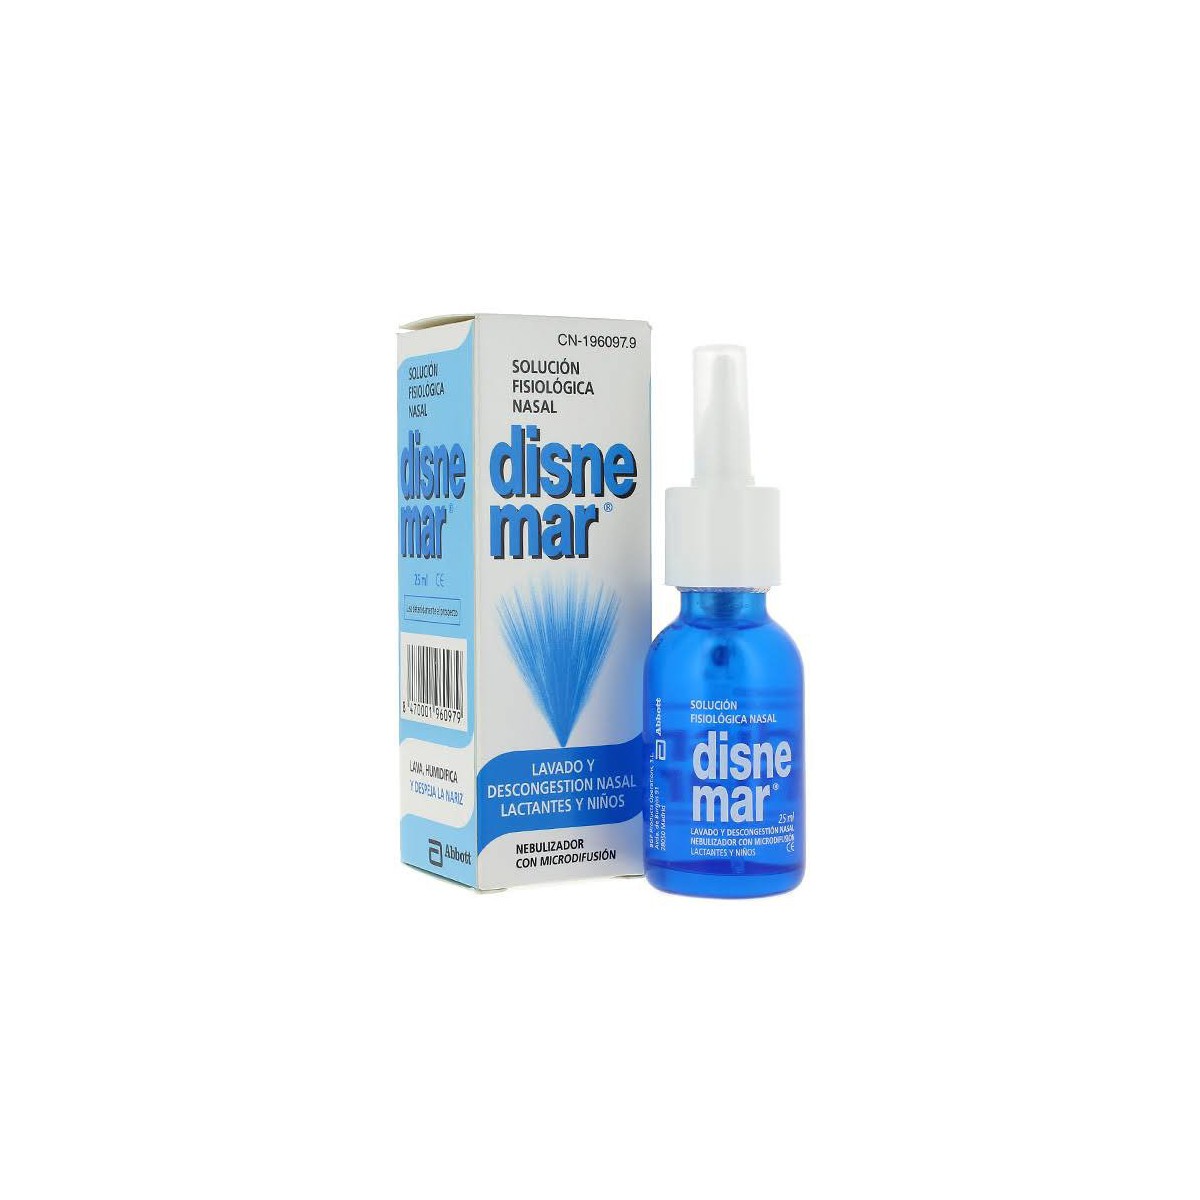 DisneMar Nasal Lactantes 25 ml